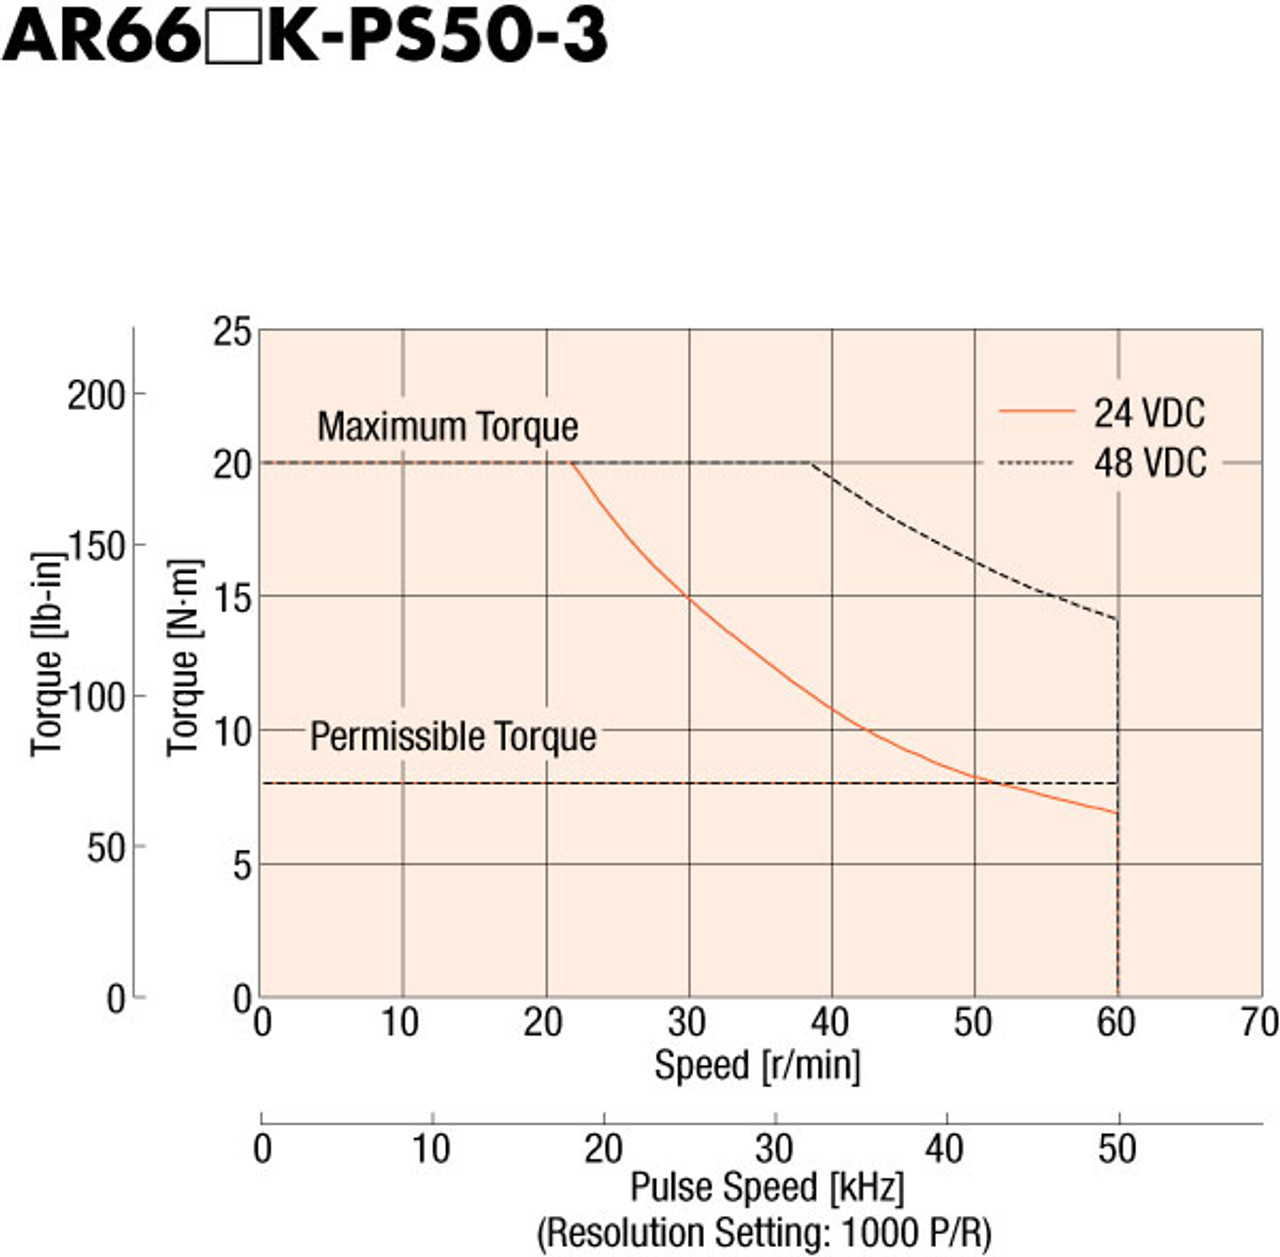 AR66MKD-PS50-3 - Speed-Torque